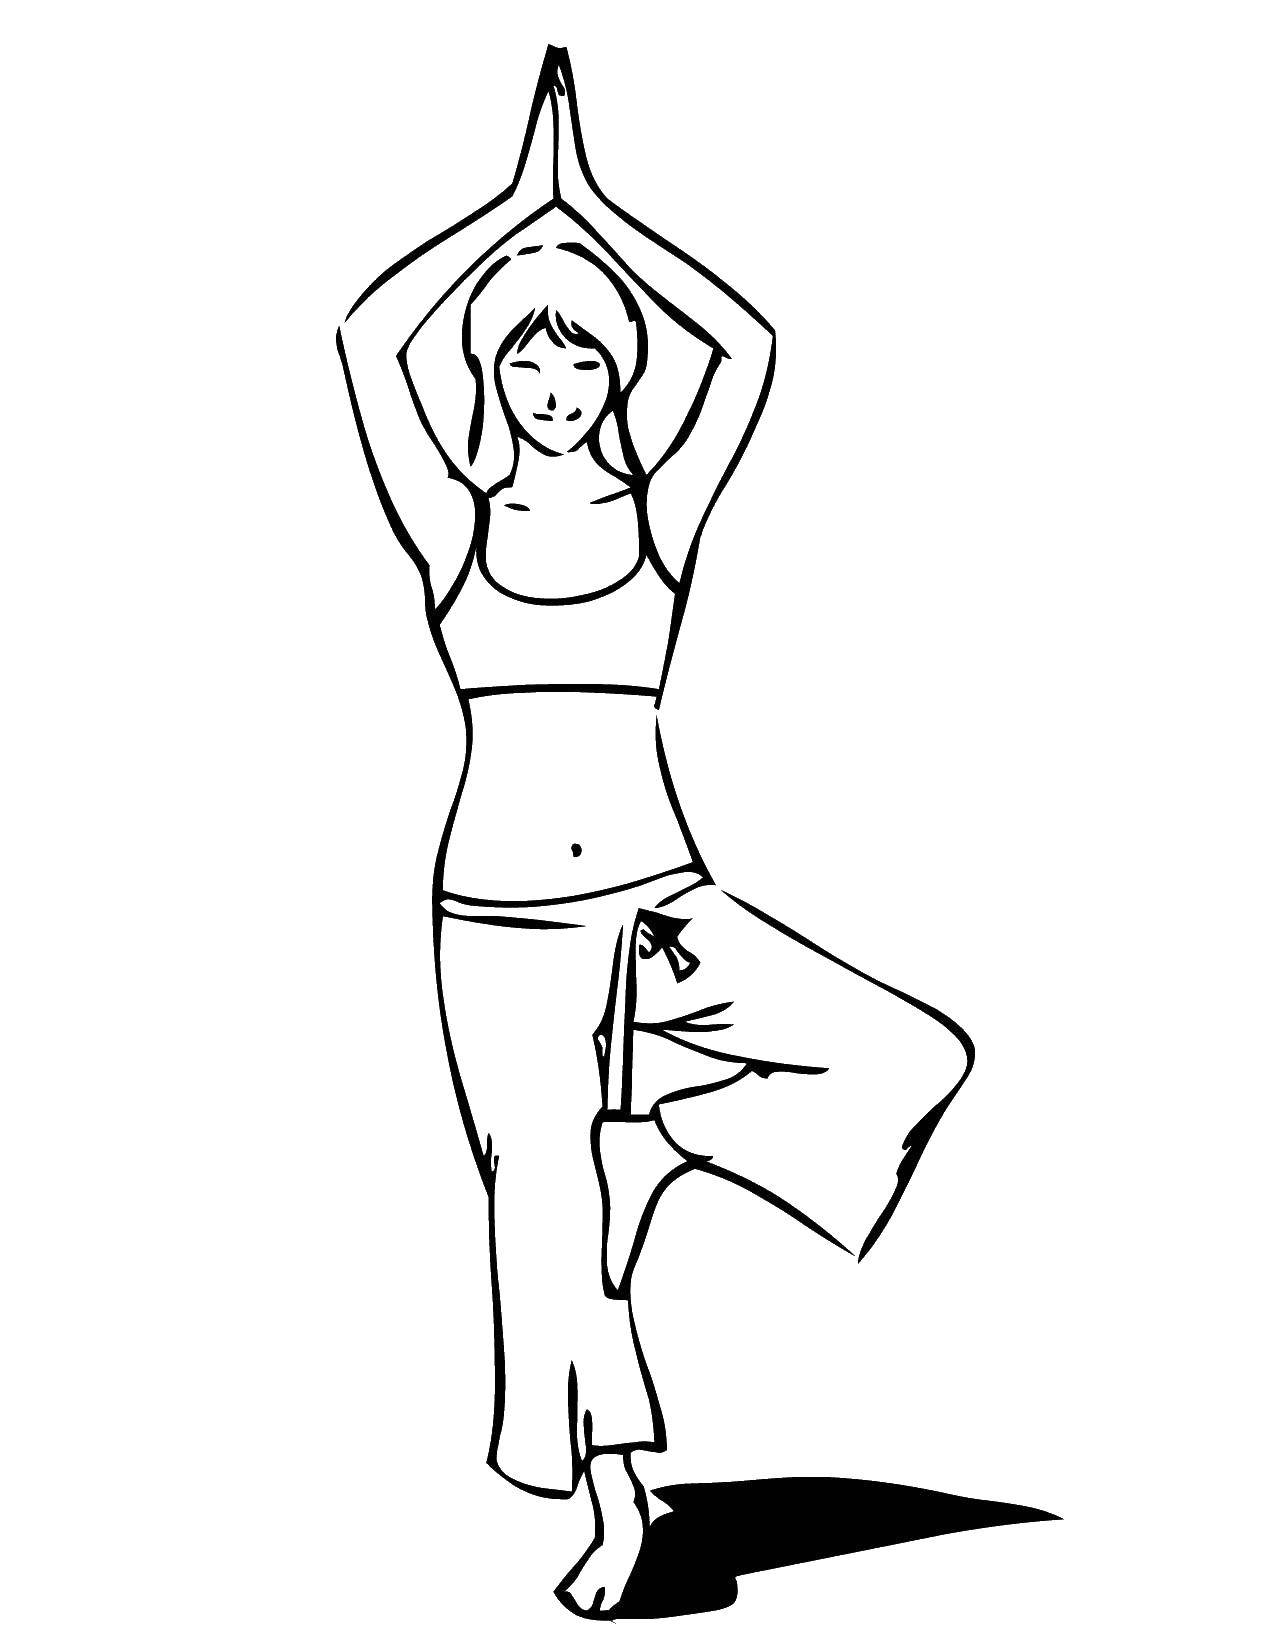 Coloring Pose of yoga. Category yoga. Tags:  yoga.